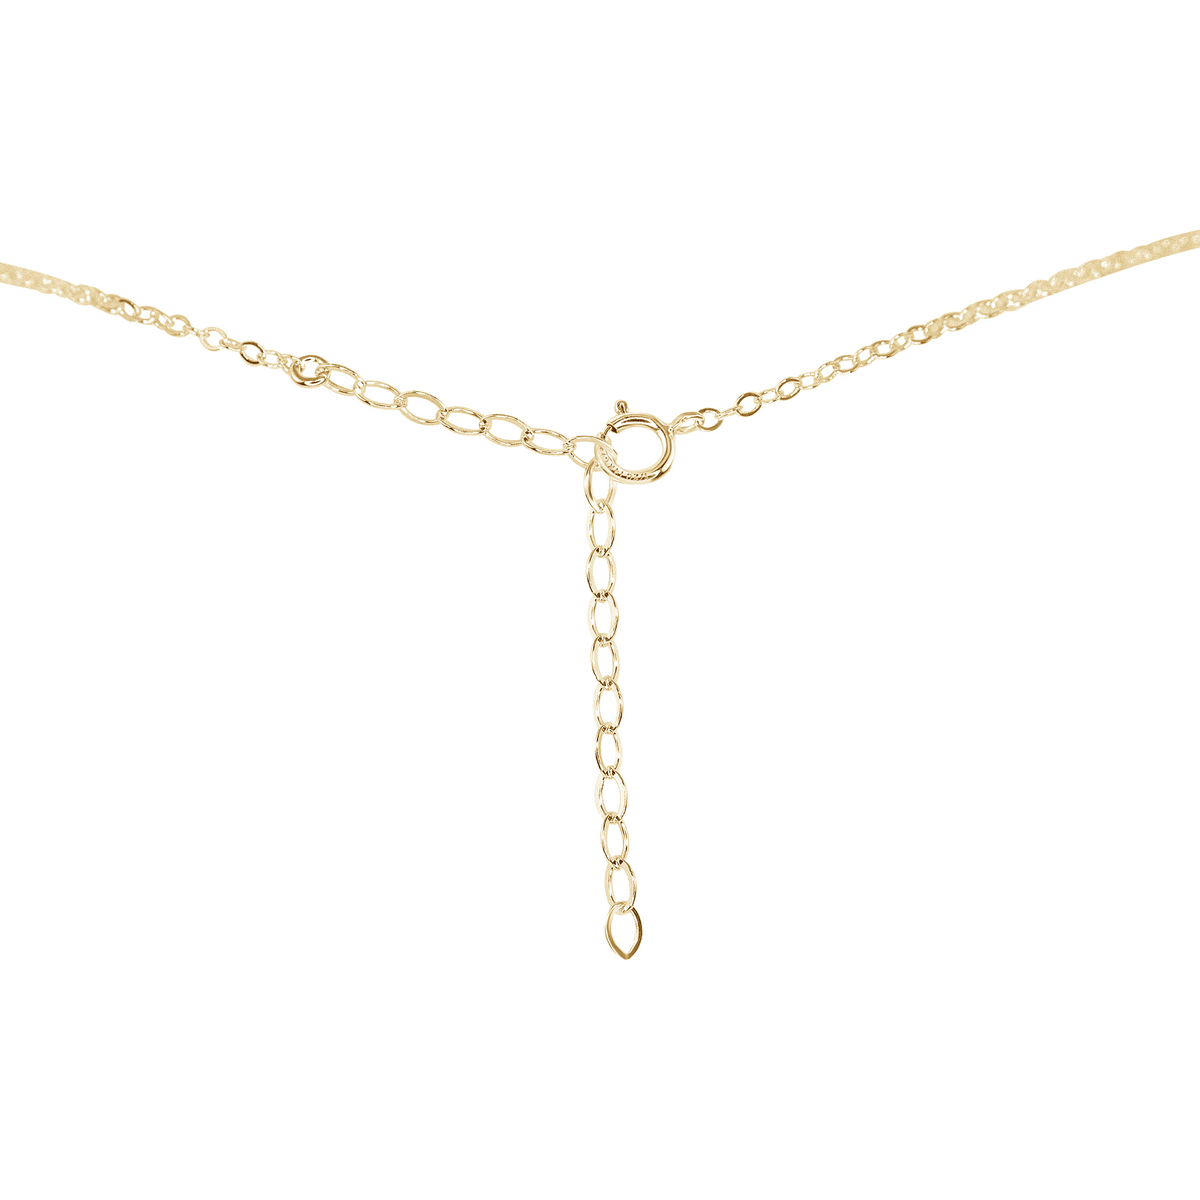 Sapphire Beaded Chain Choker Necklace - Sapphire Beaded Chain Choker Necklace - Sterling Silver - Luna Tide Handmade Crystal Jewellery